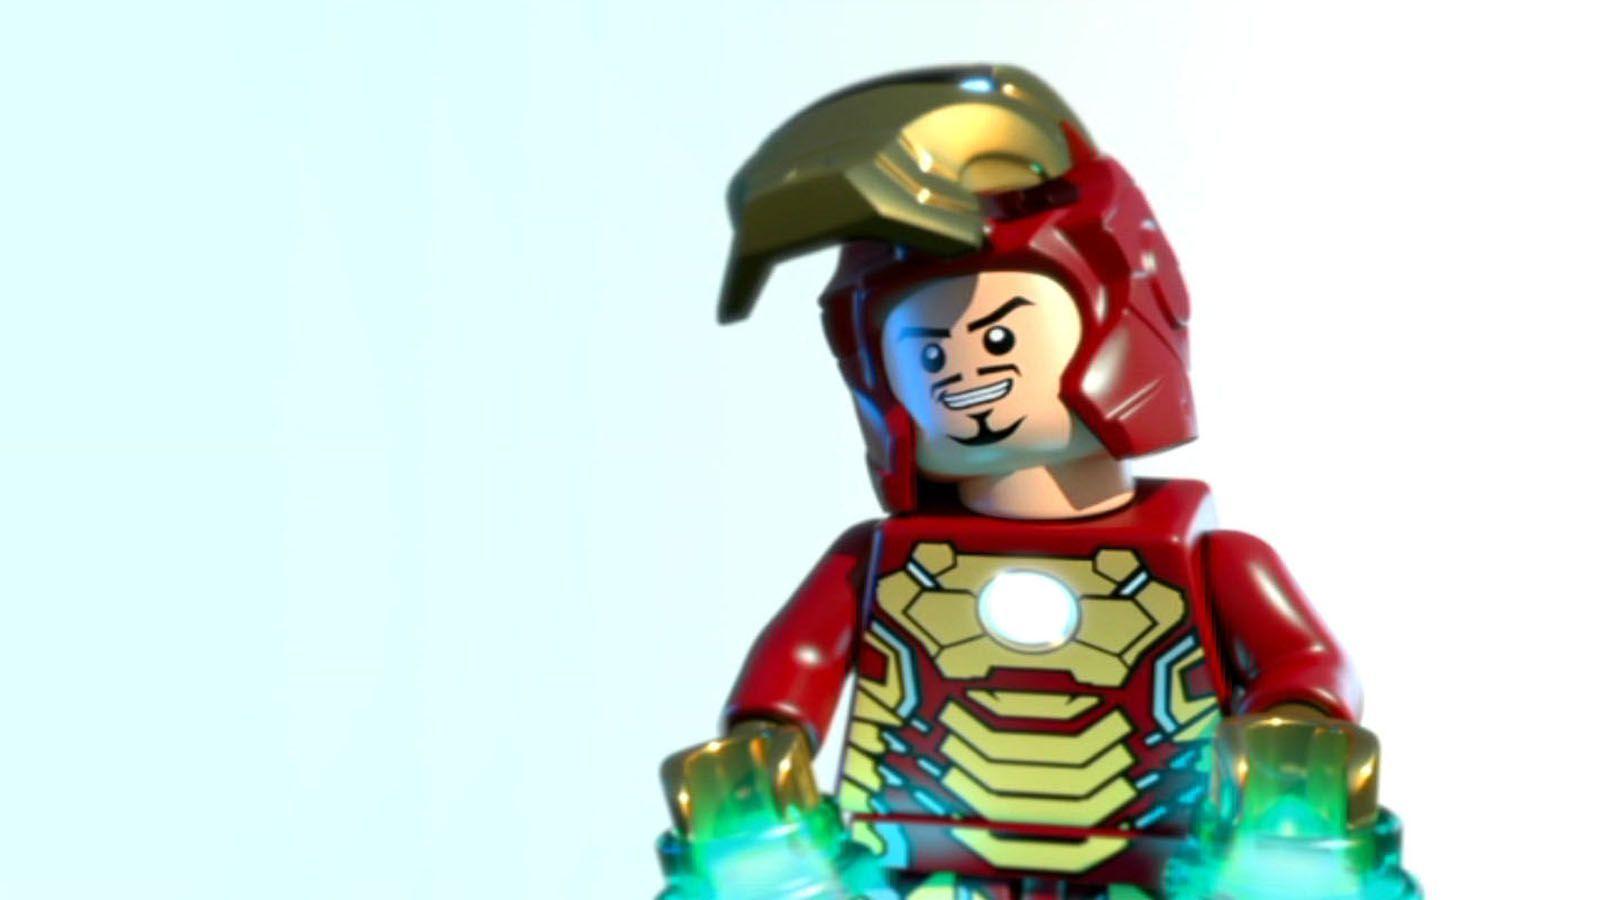 Lego Iron Man Wallpaper. Lego iron man, Lego marvel, Lego marvel